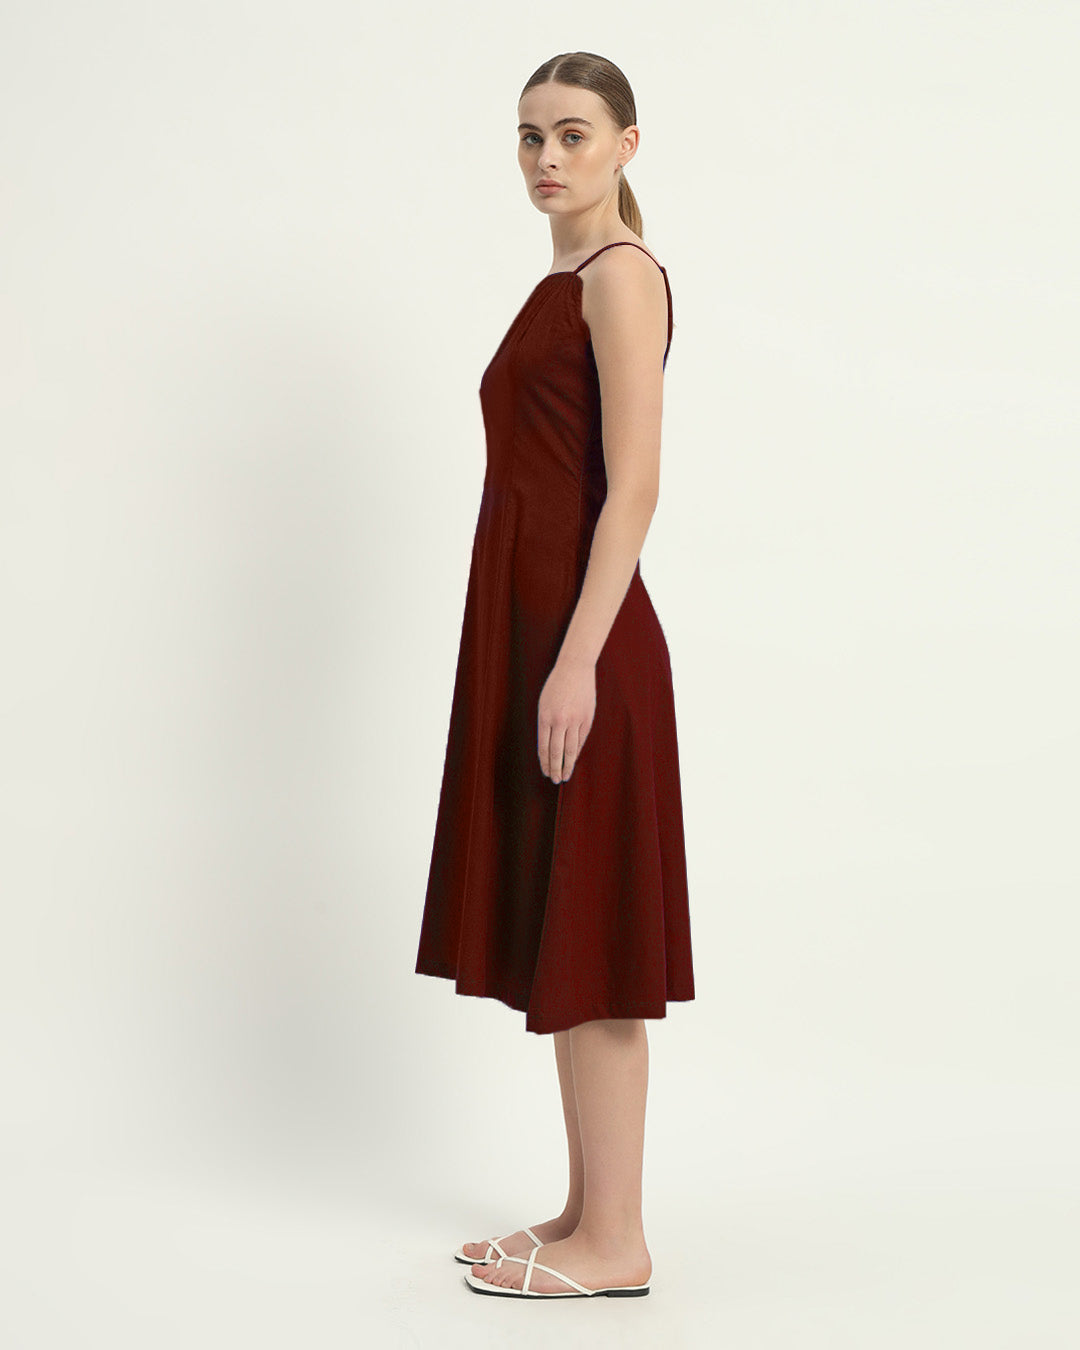 The Rouge Valatie Cotton Dress